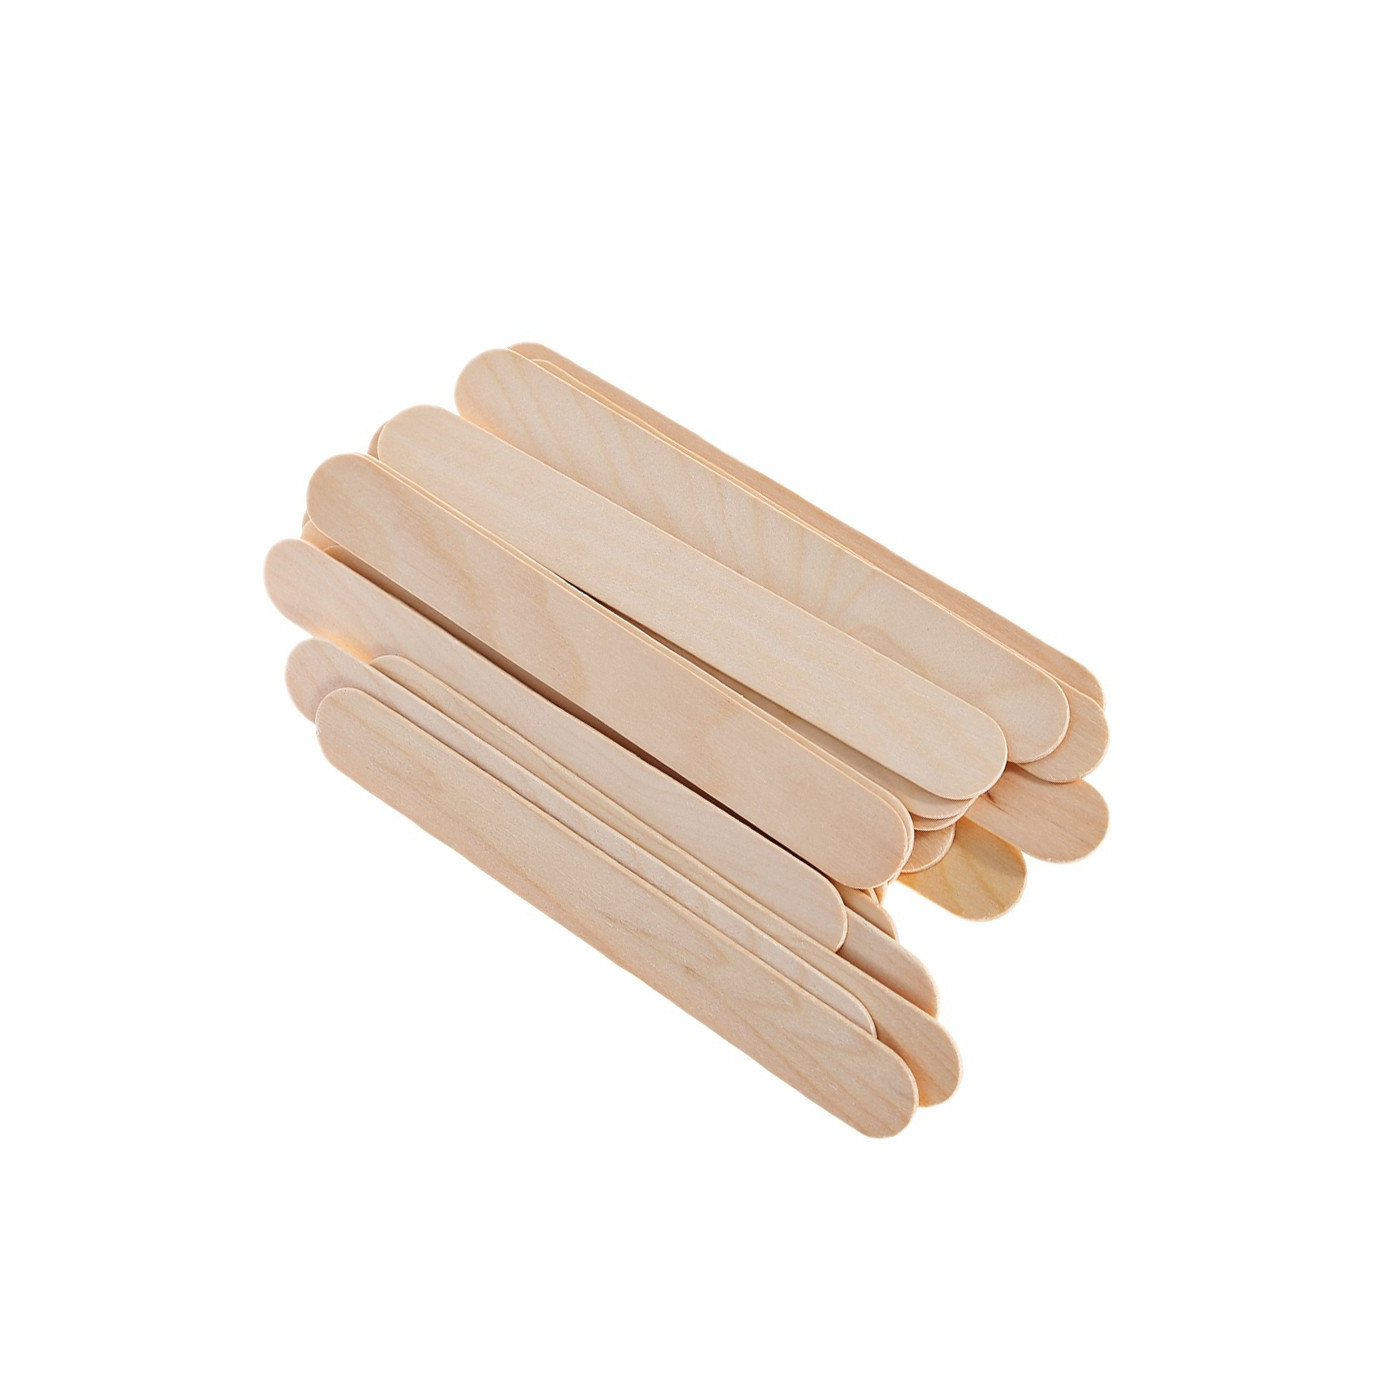 Set of 500 wooden sticks (birchwood), 150x17x1.7 mm